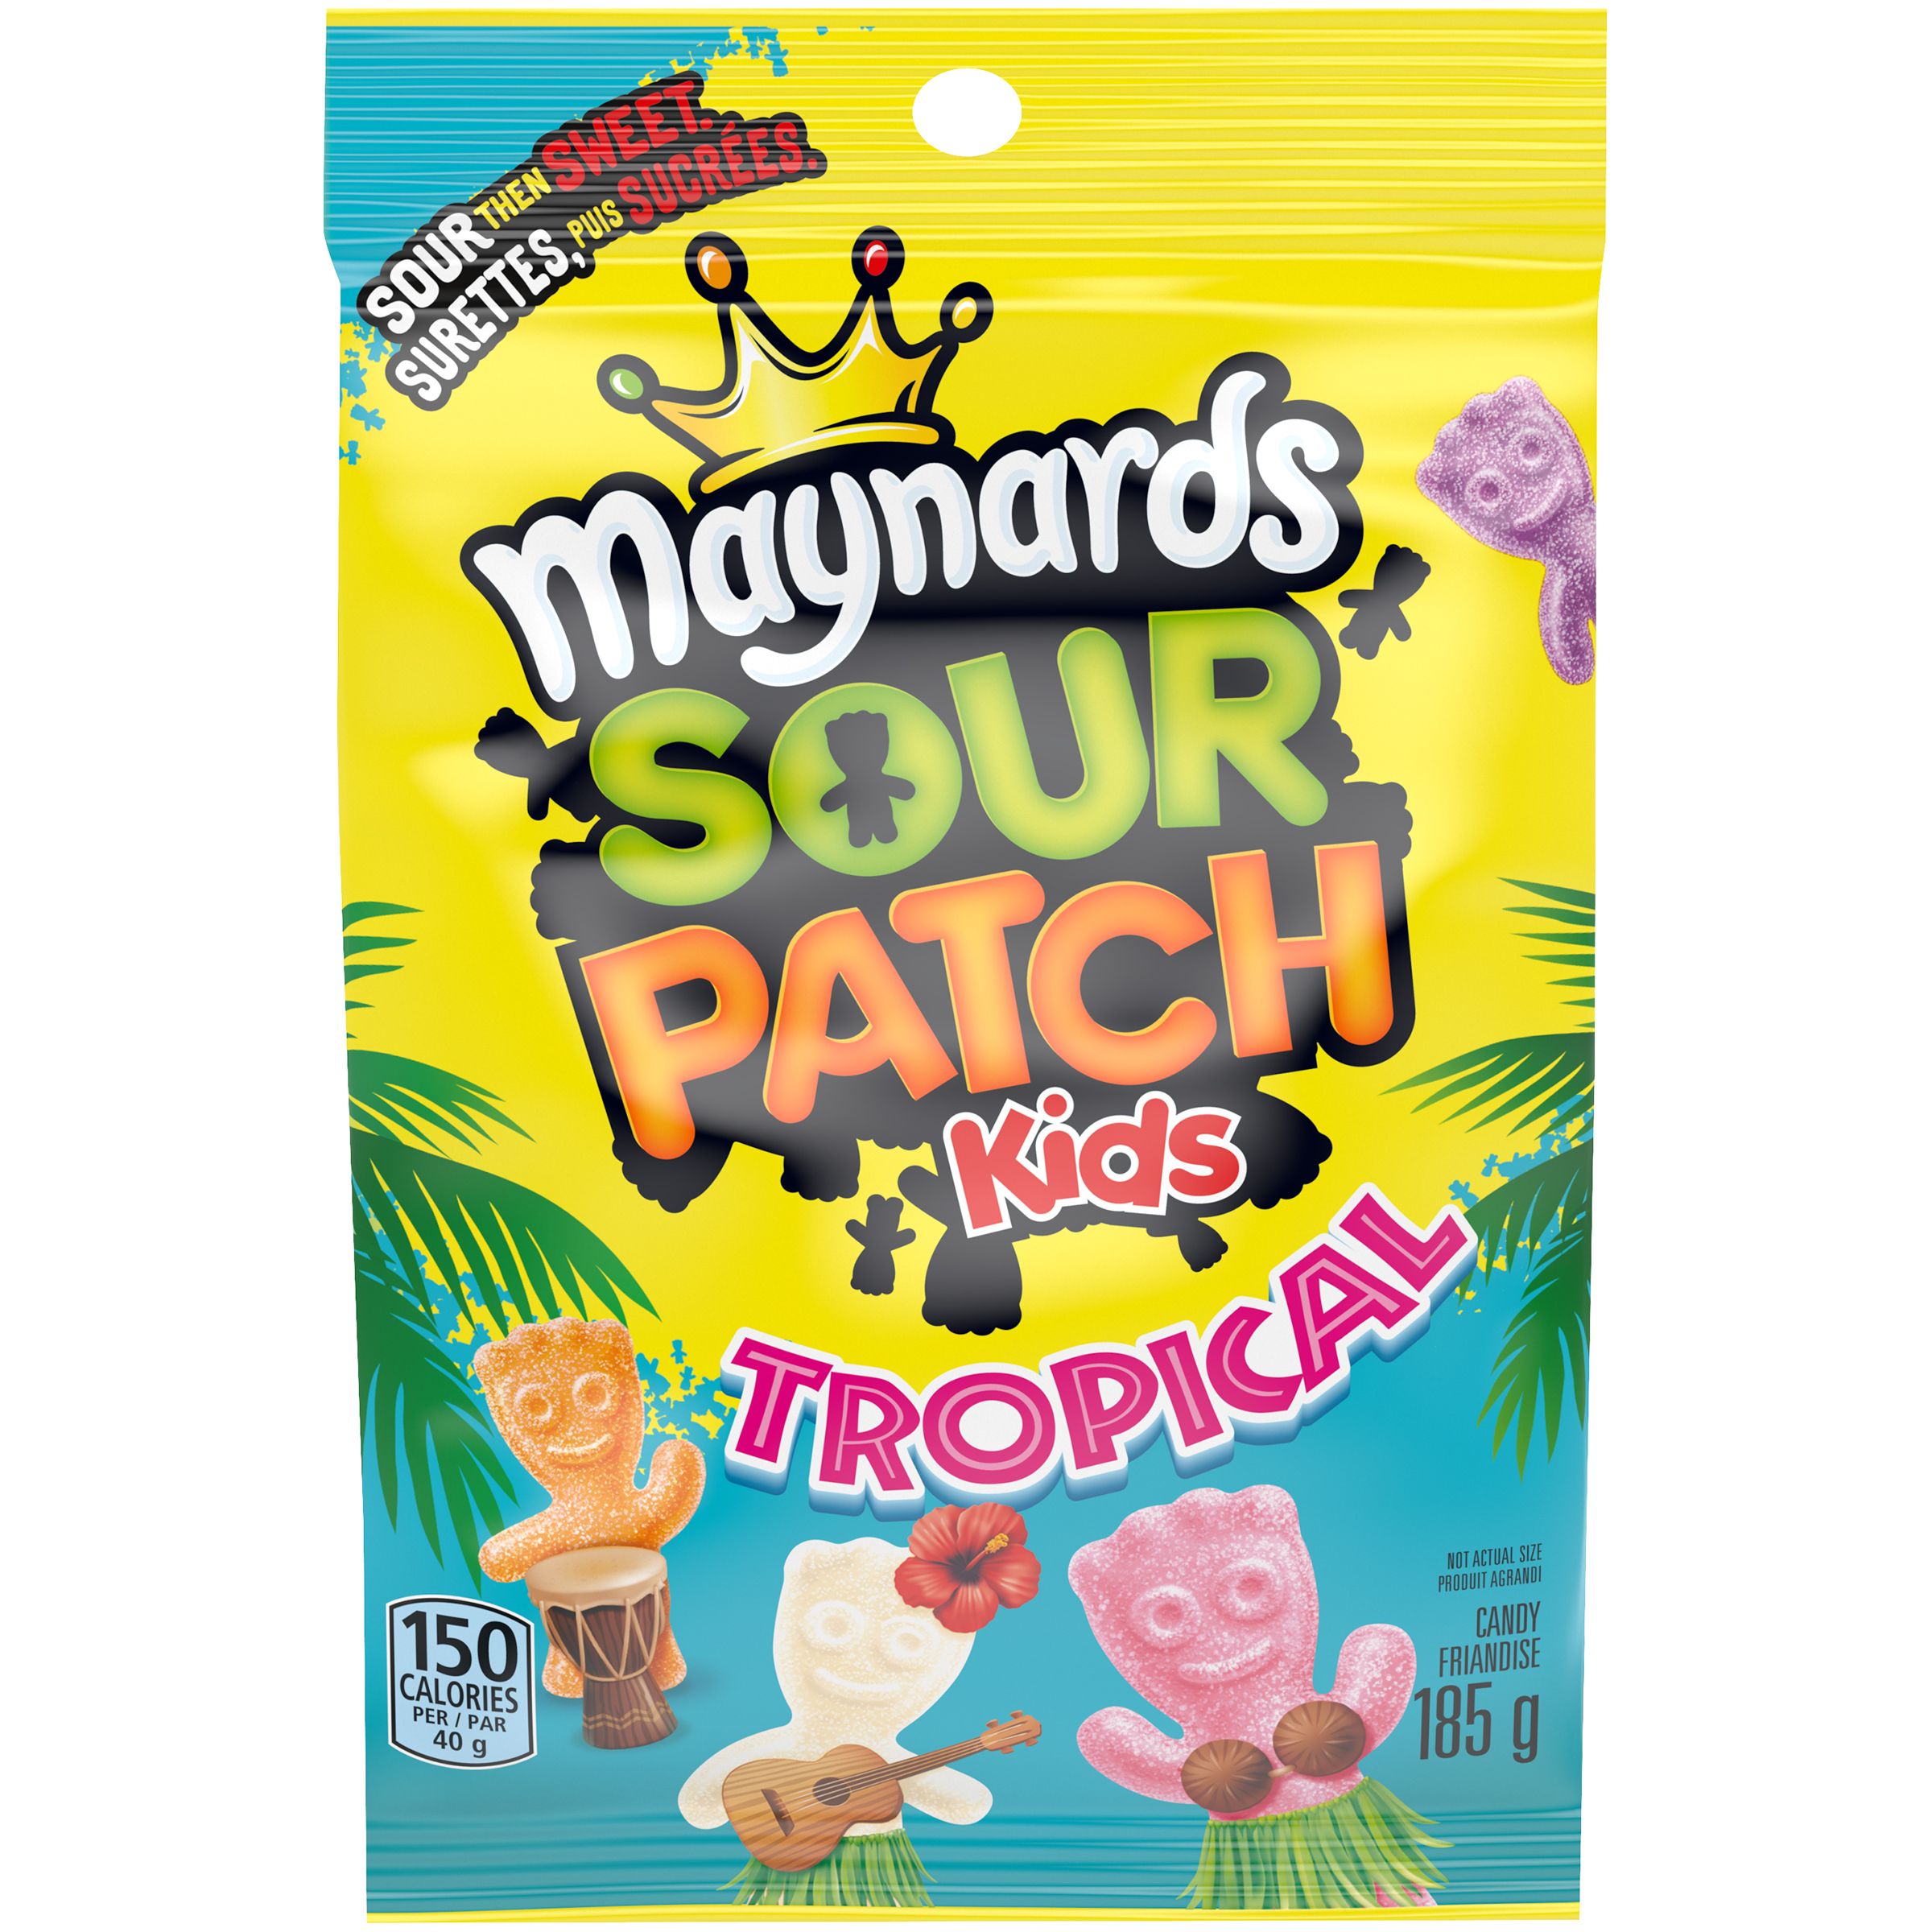 Maynards Sour Patch Kids Tropical Candy, 185G